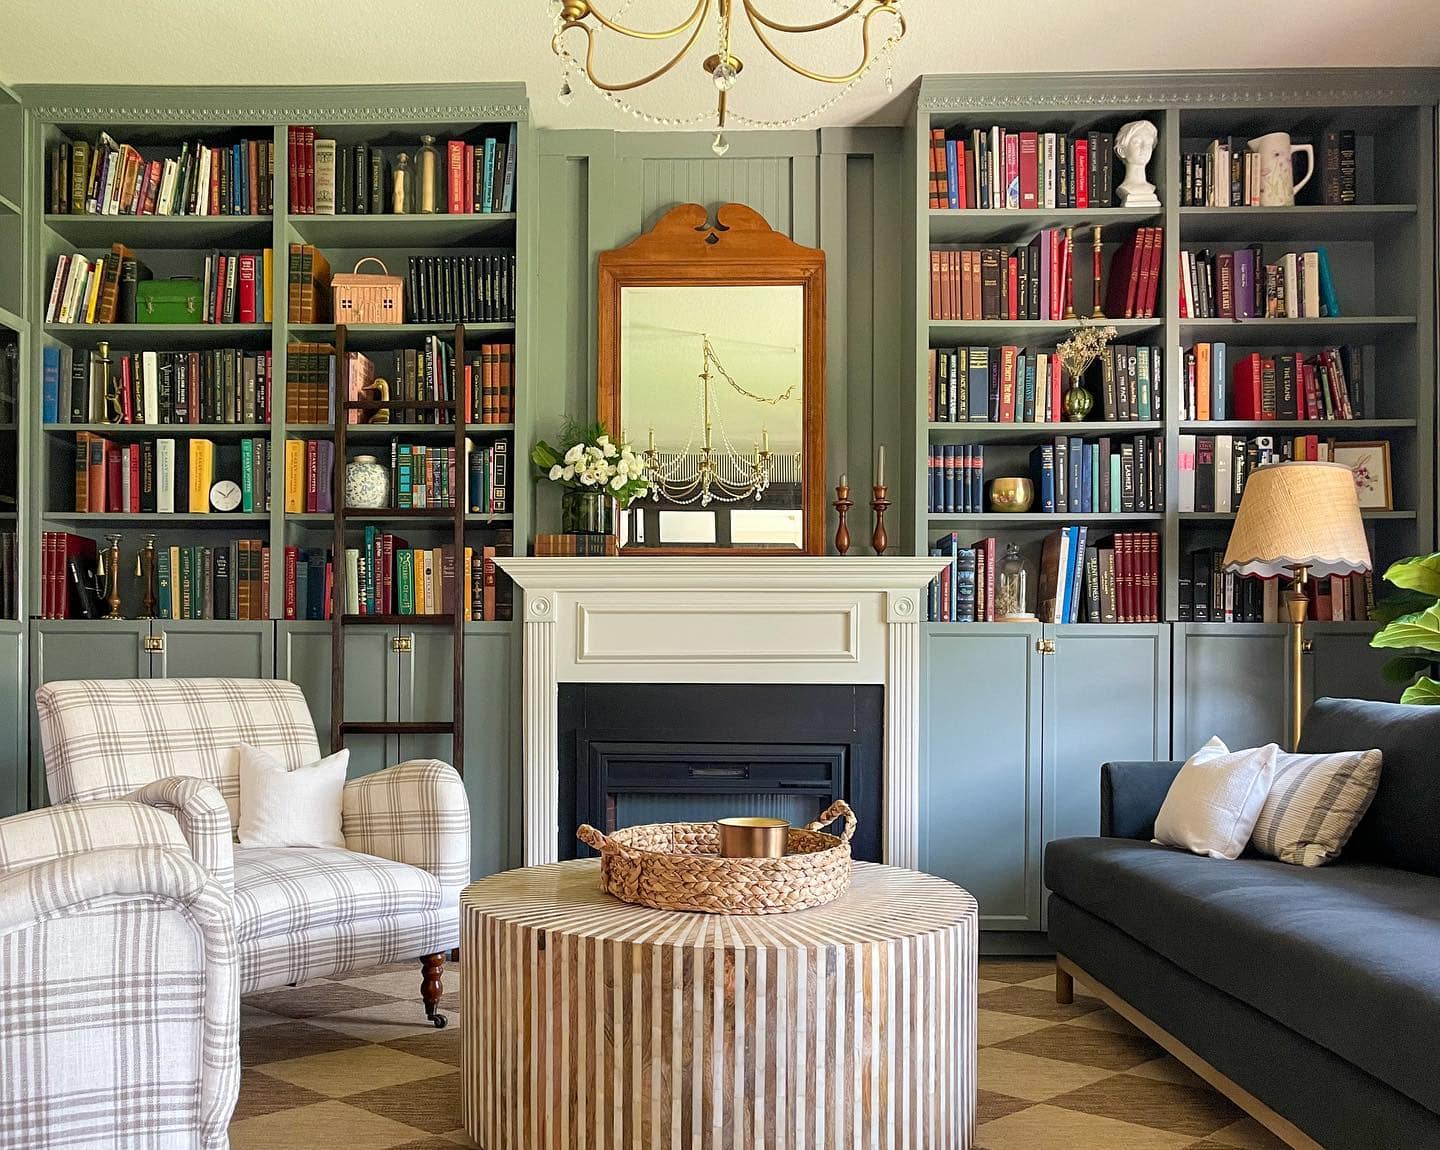 Green bookshelf - green home decor idea in traditional living room